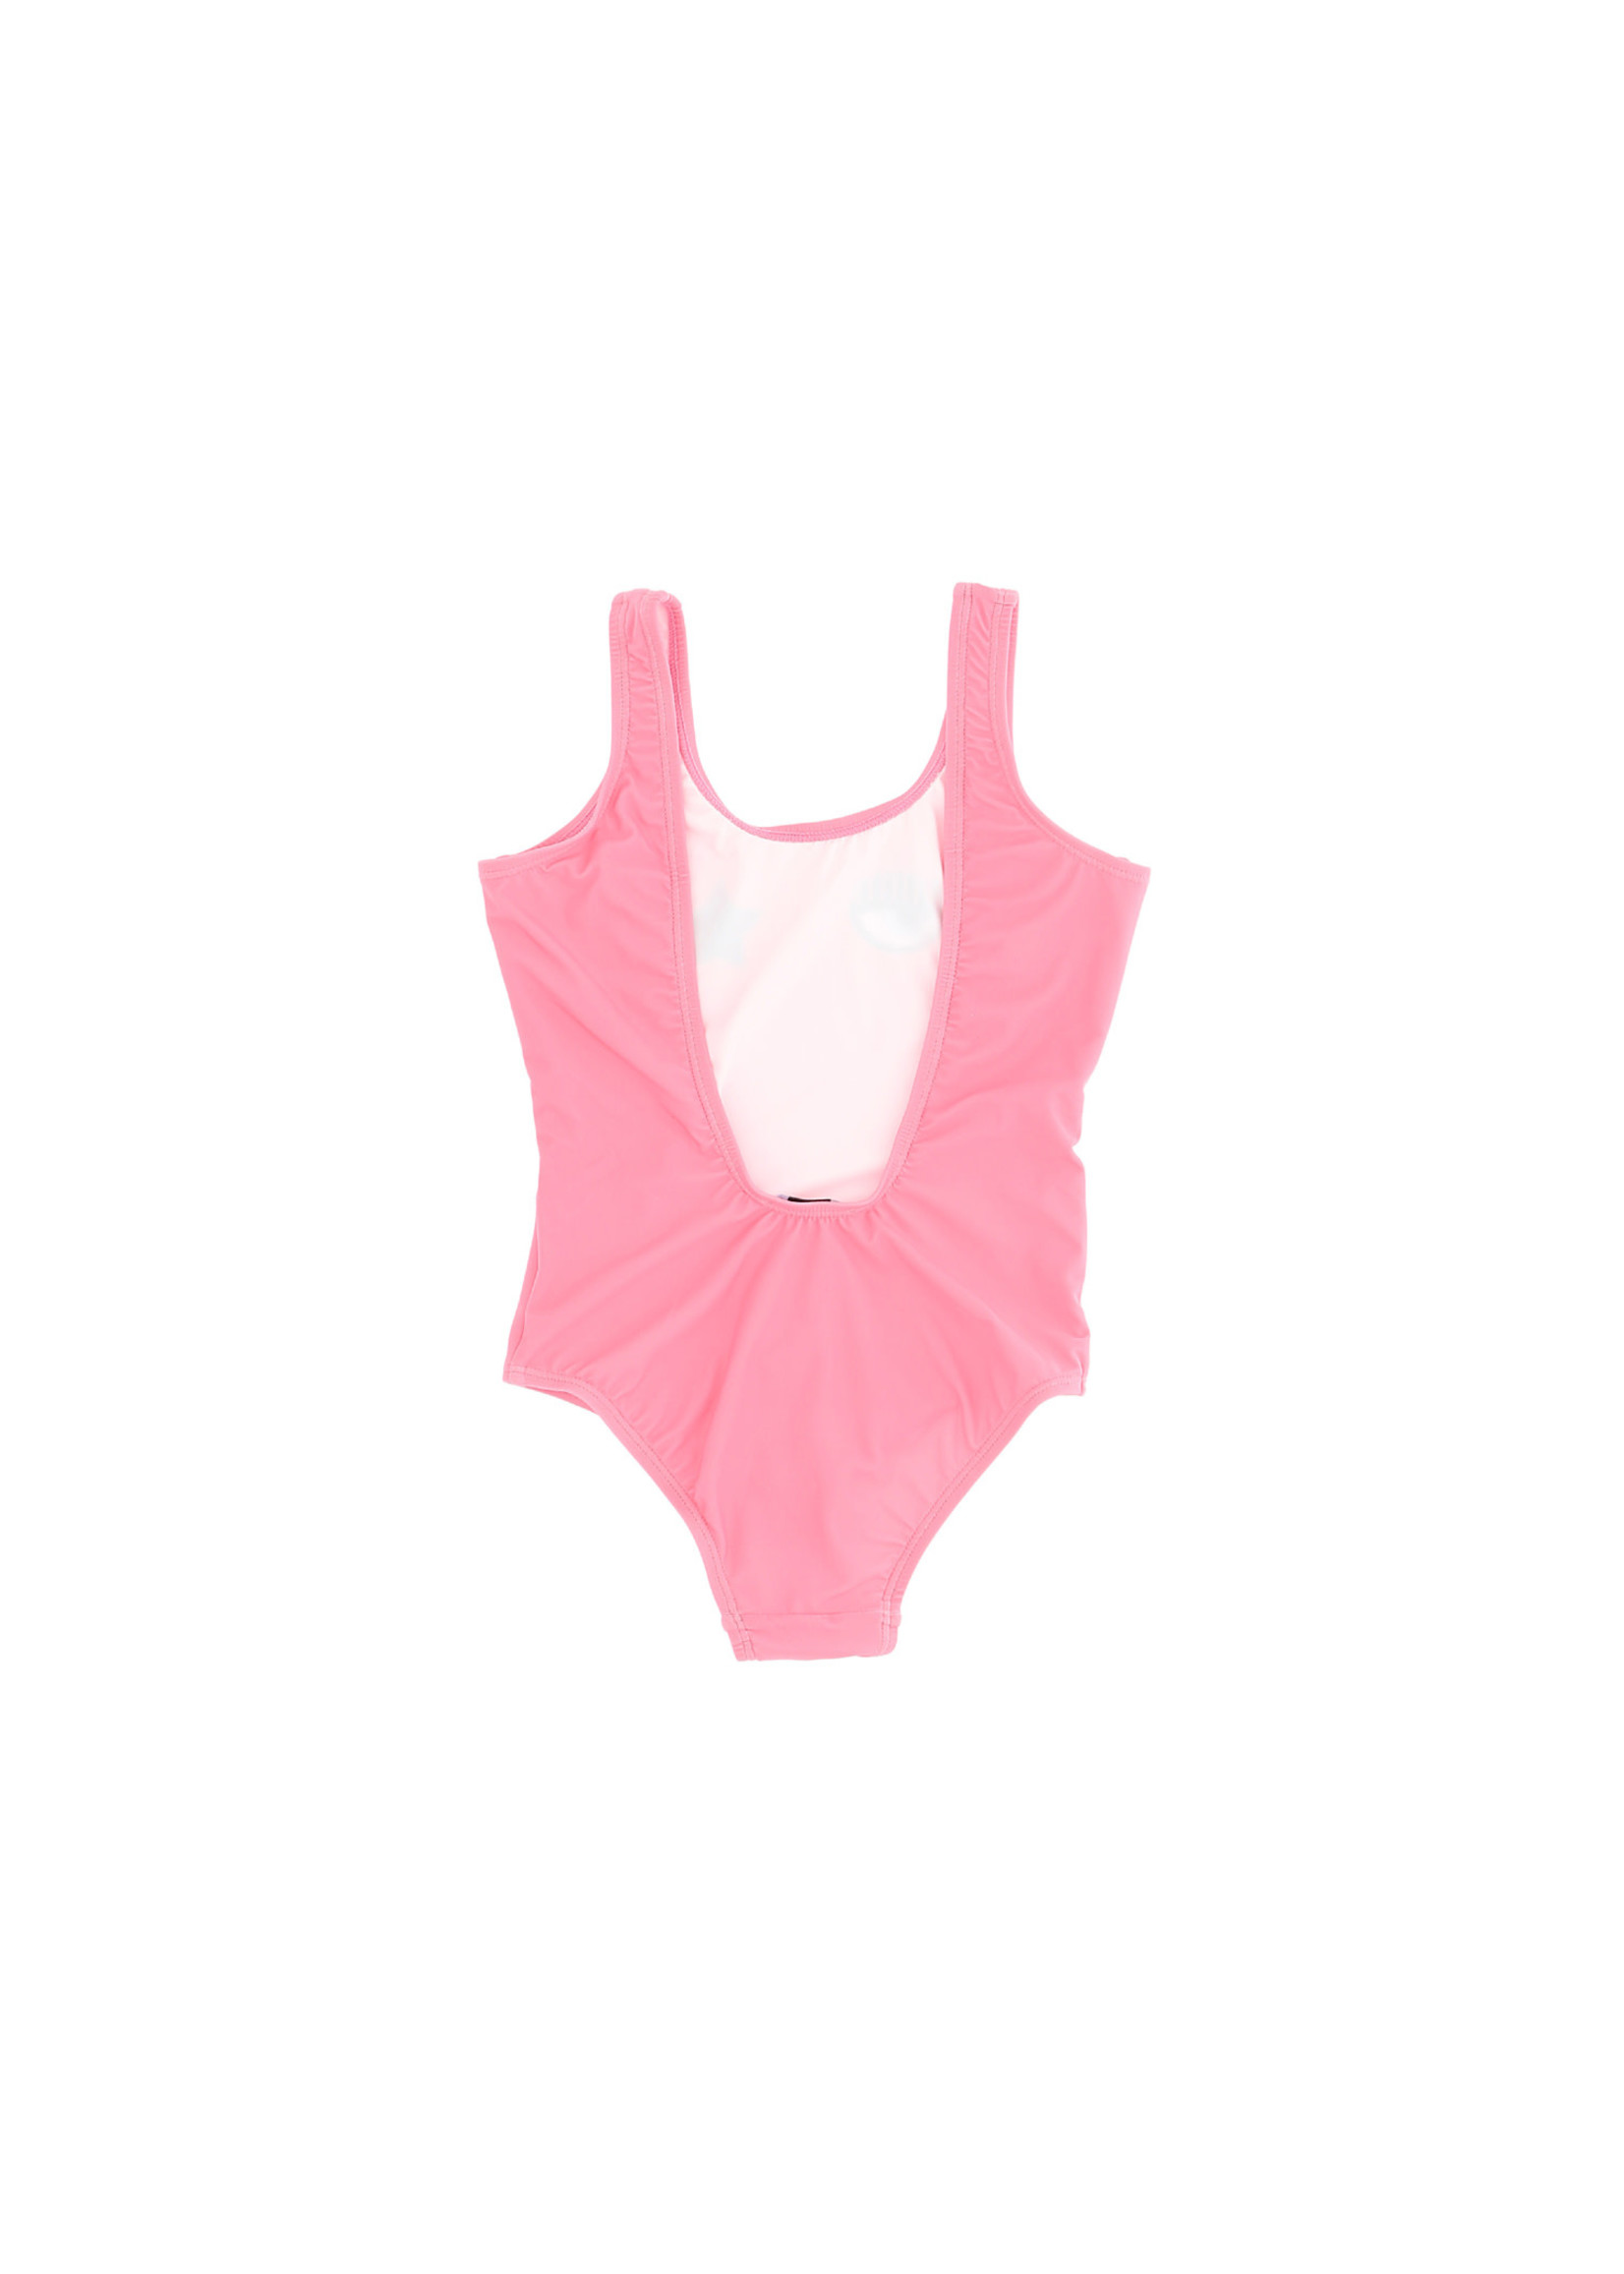 Chiara Ferragni by Monnalisa Chiara Ferragni Girl swimsuit pink logo eyestar - 599040